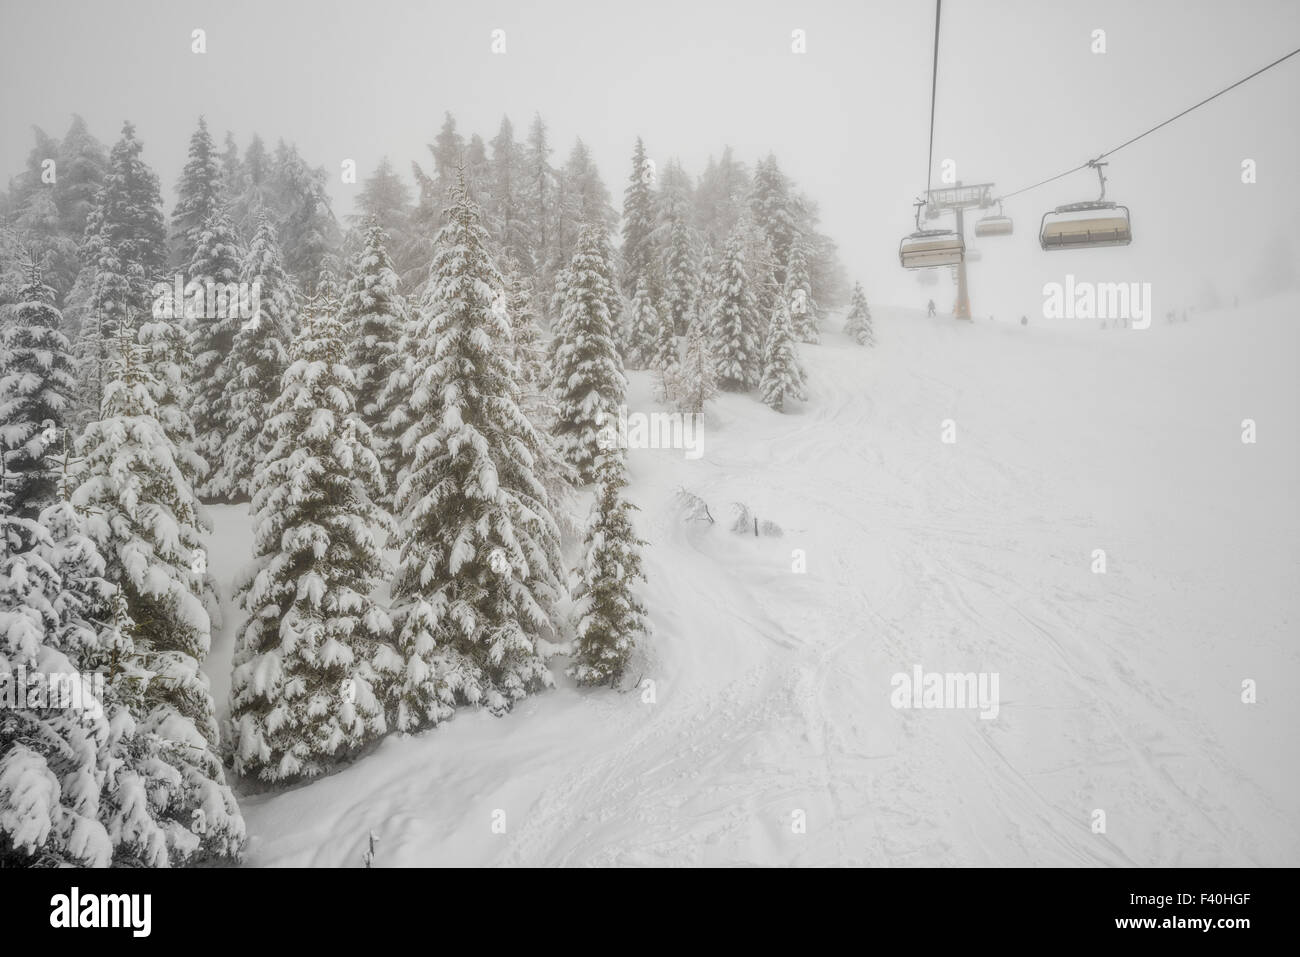 Chairlift in snowfall at alpine ski resort Stock Photo